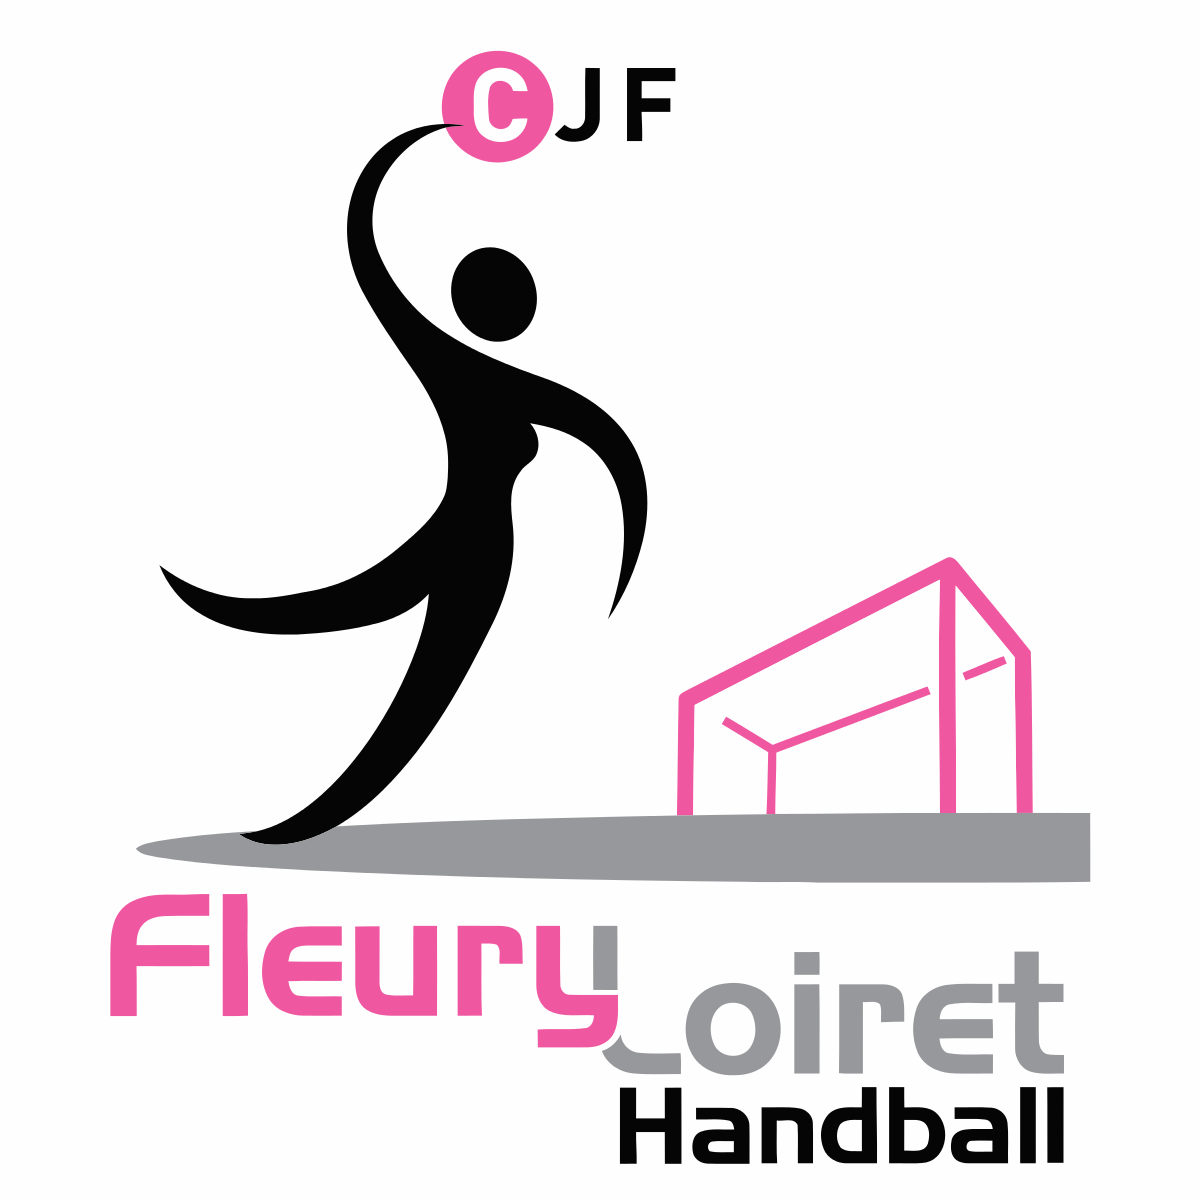 CJF Fleury Loiret Handball